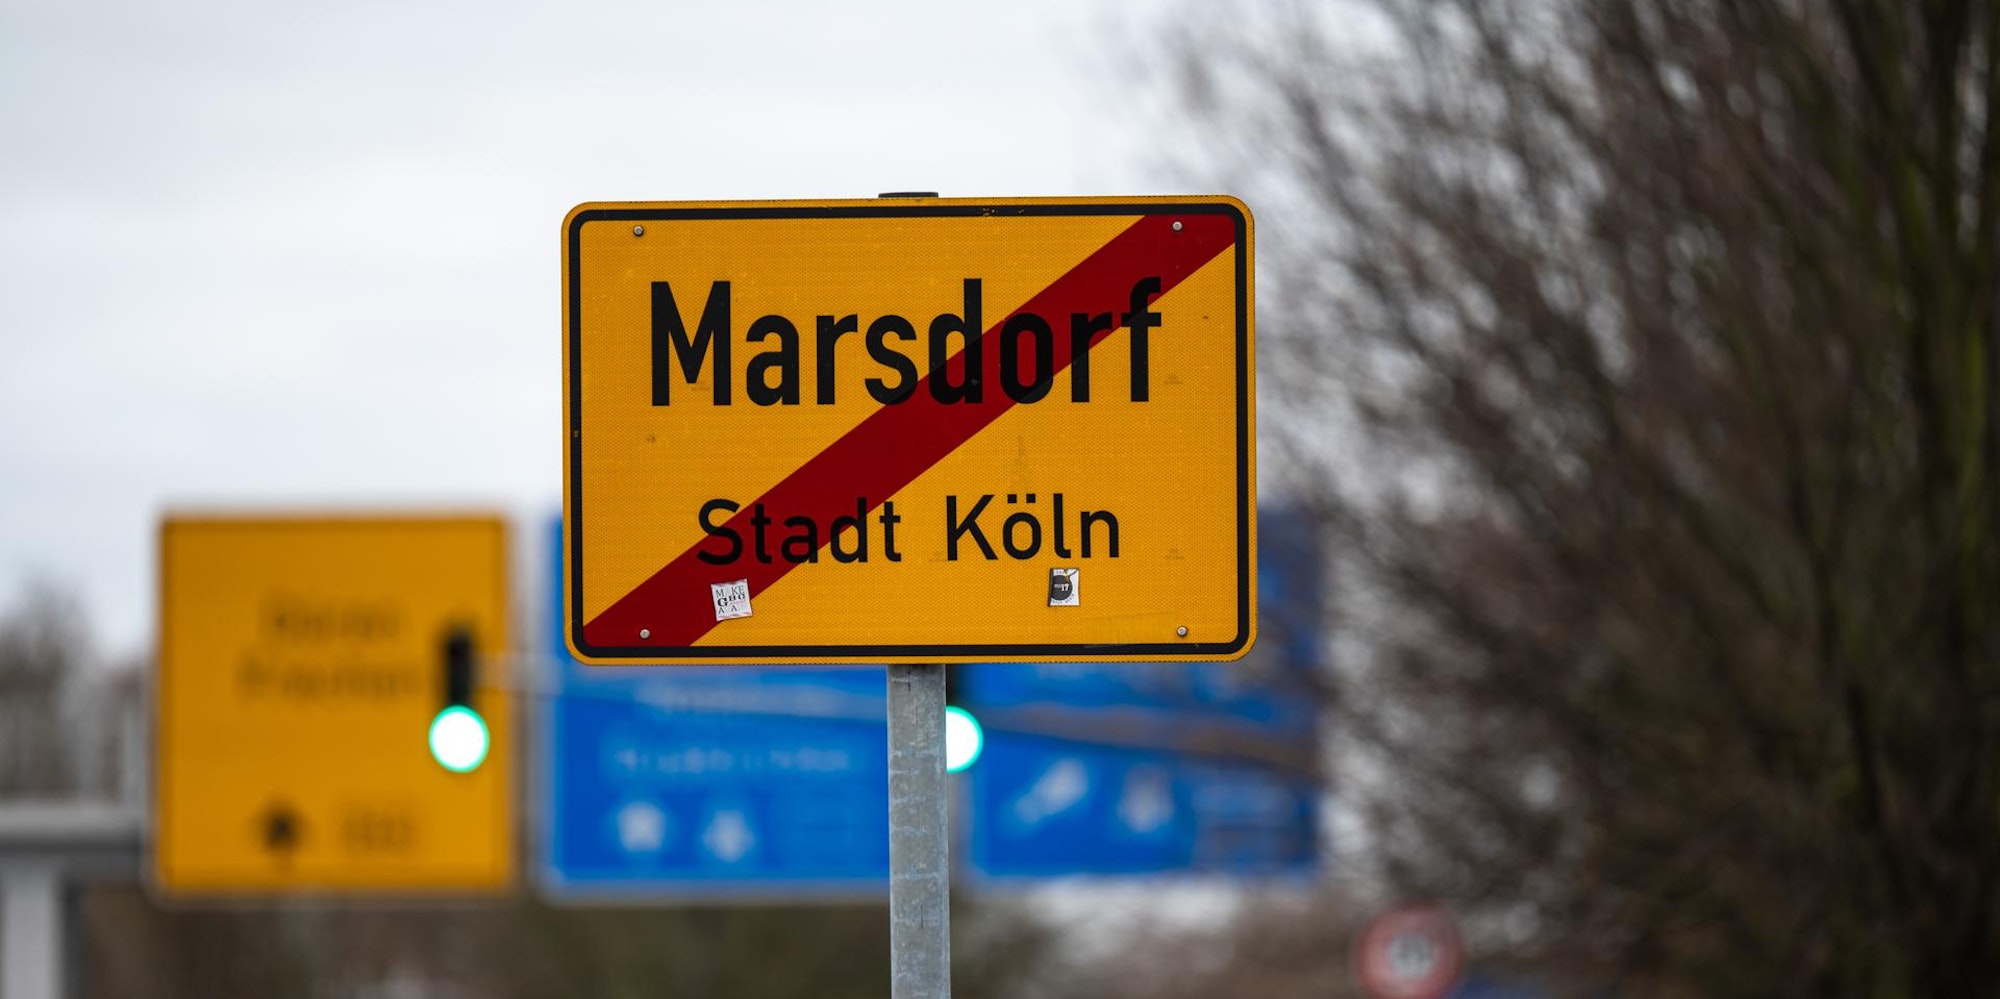 marsdorf symbol